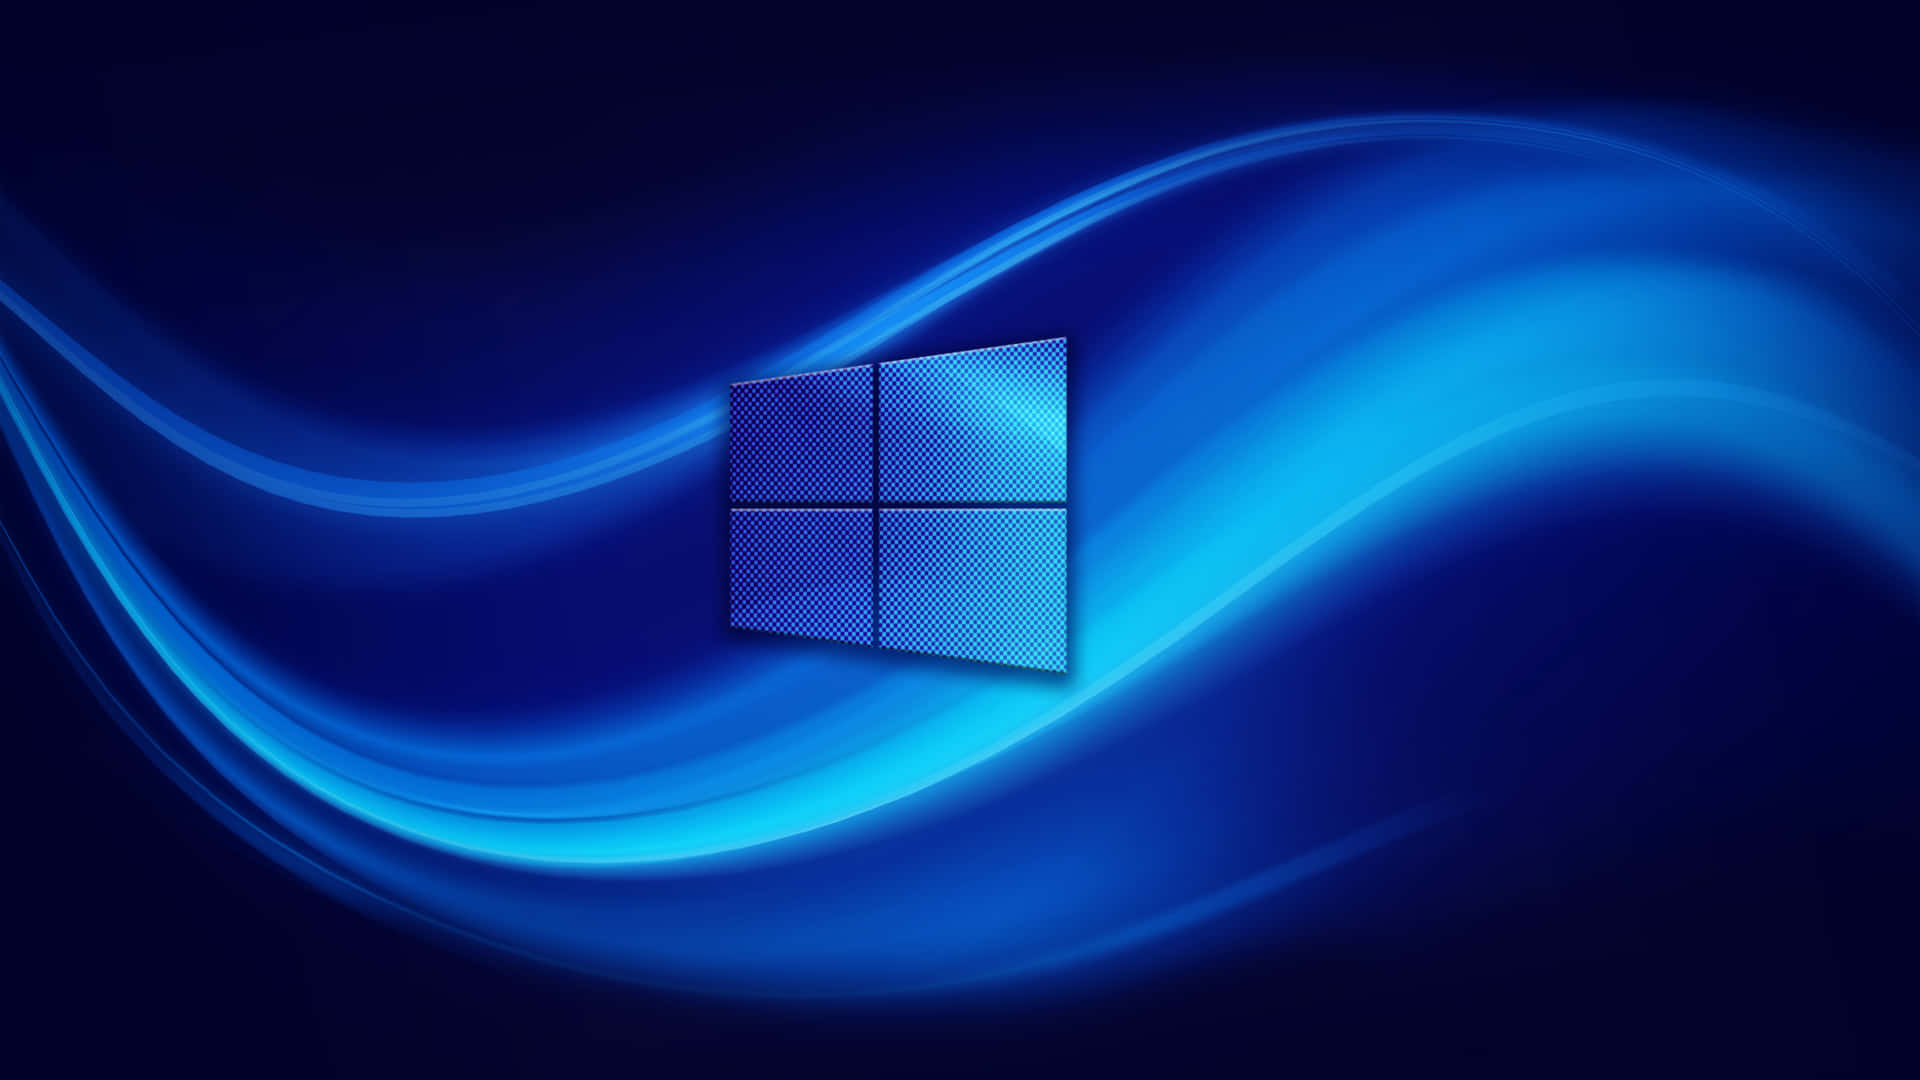 Explore Windows 10 with a Visual Narrative